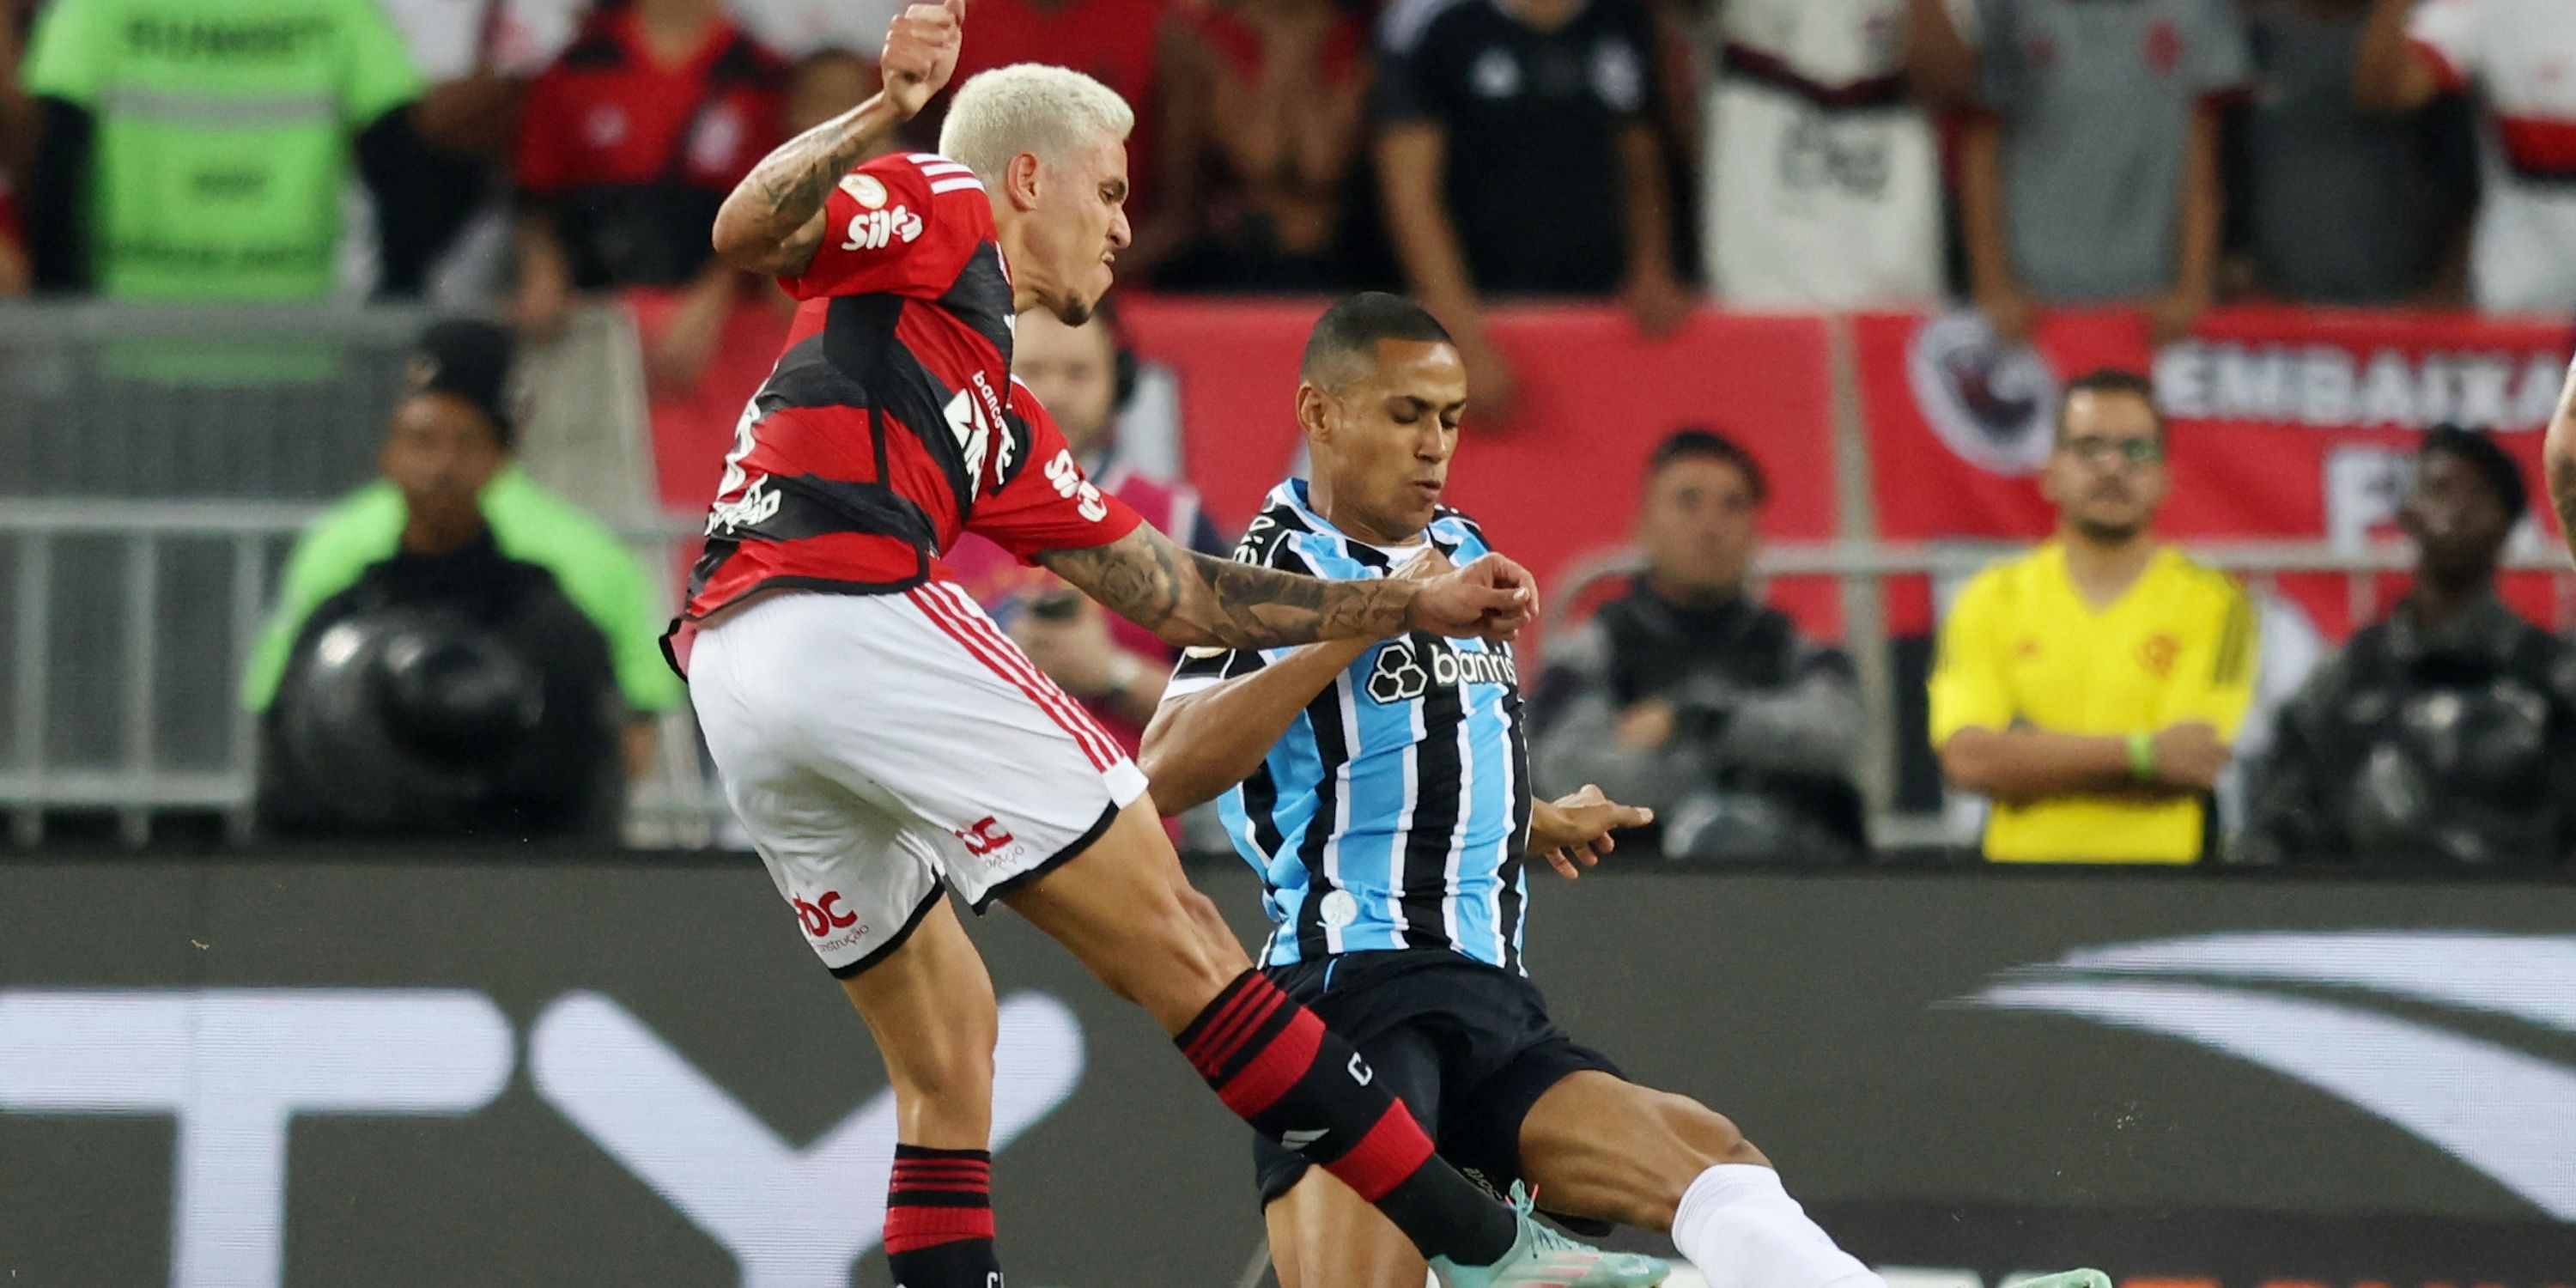 Flamengo's Pedro scores their second goal